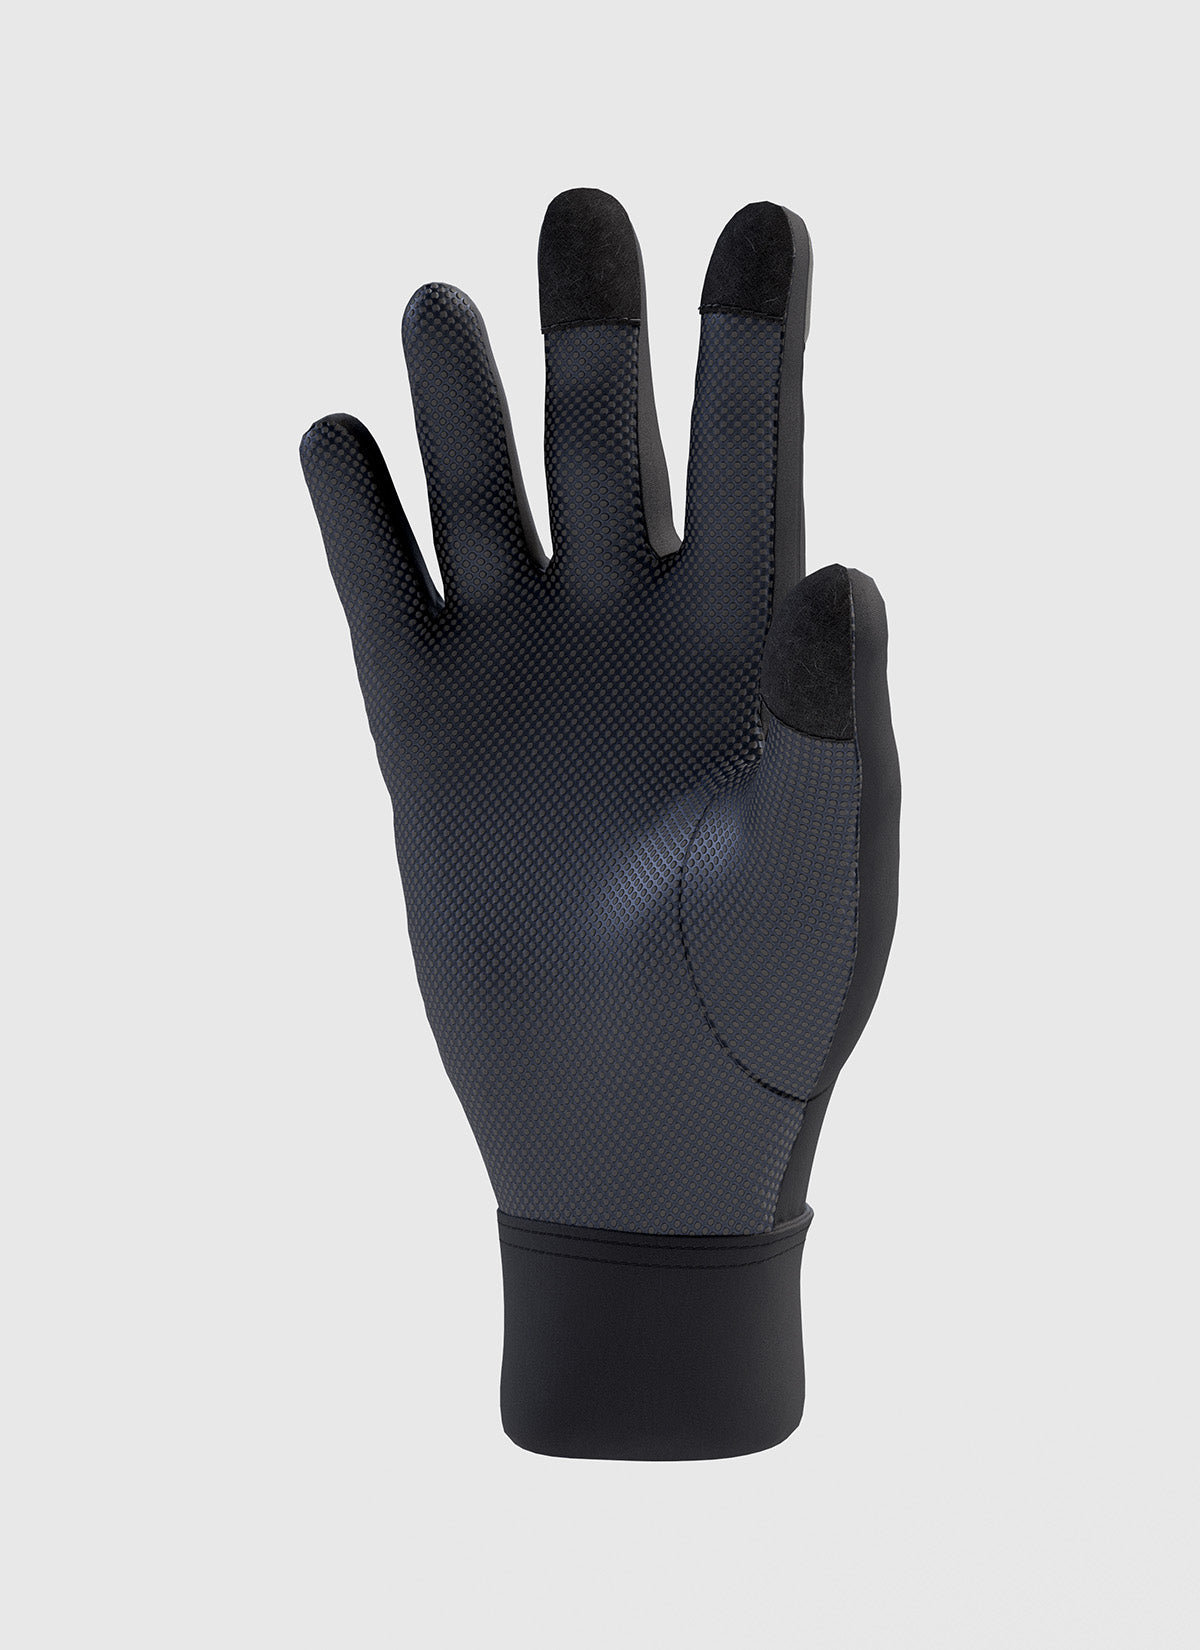 ThermoFleece Gloves - Black